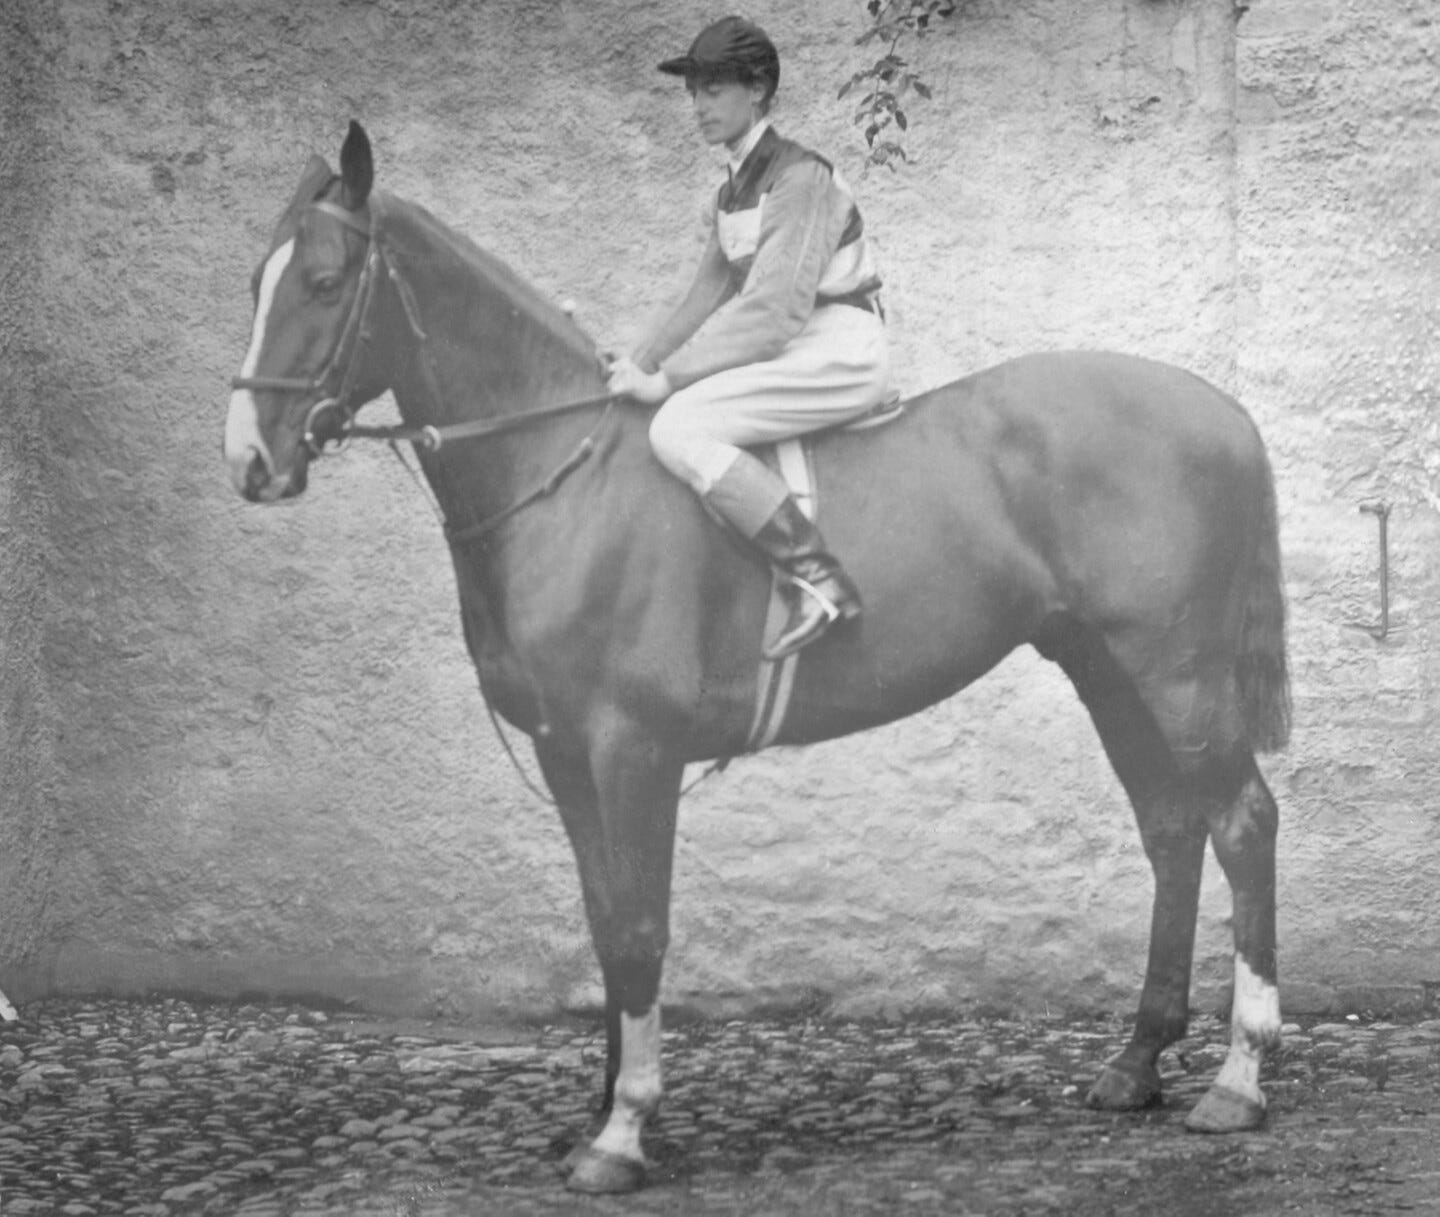 Bland on horseback, circa 1908